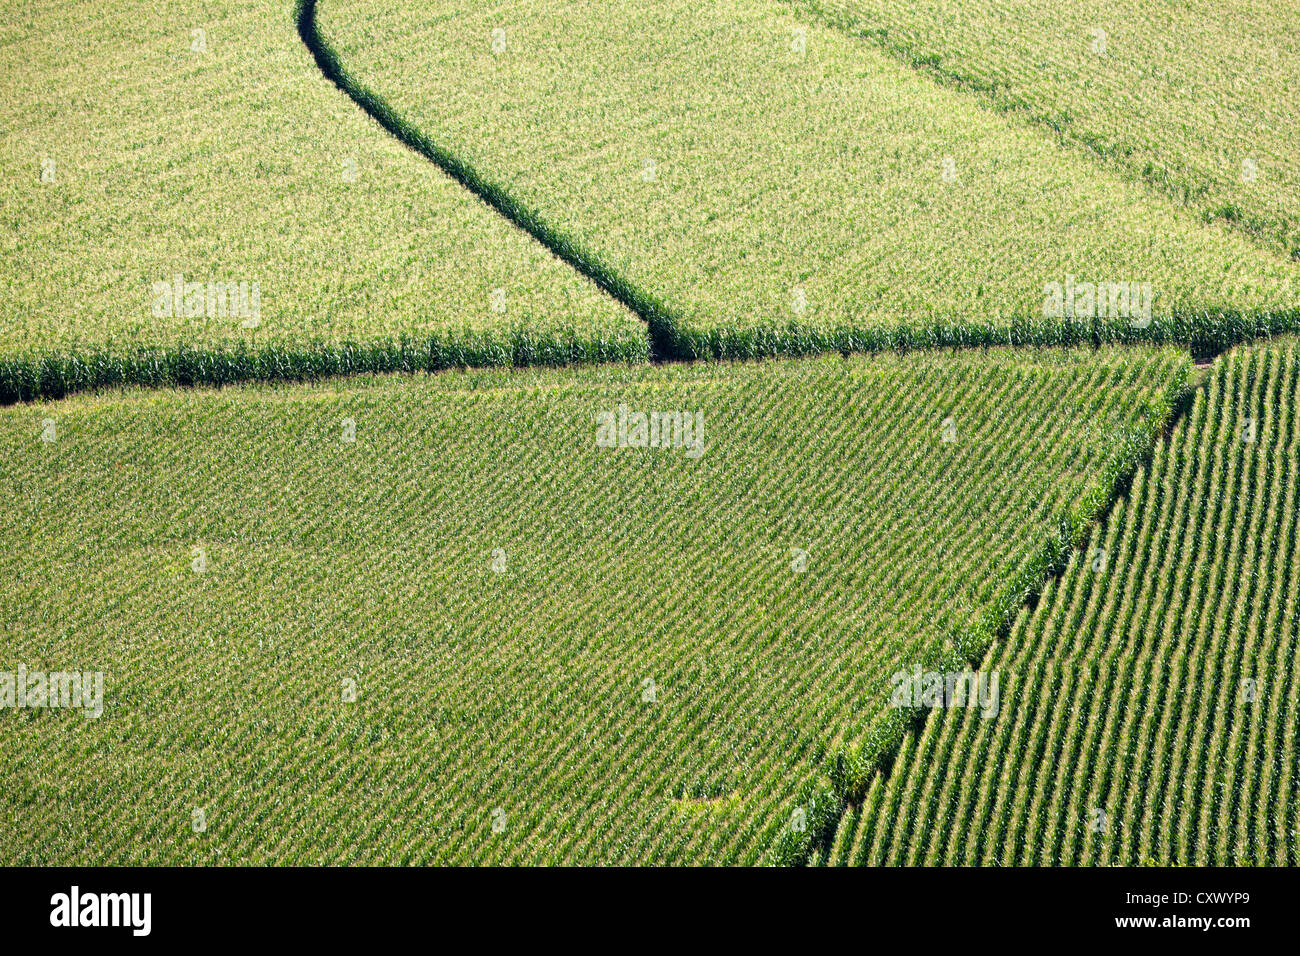 Crop patterns in a field Stock Photo